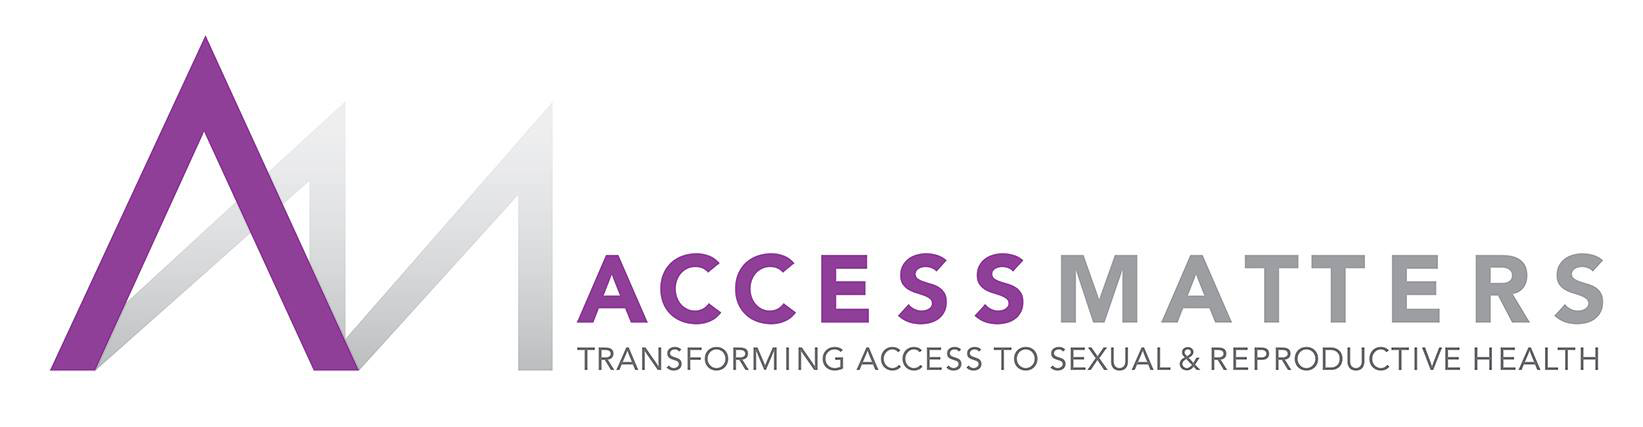 Access Matters